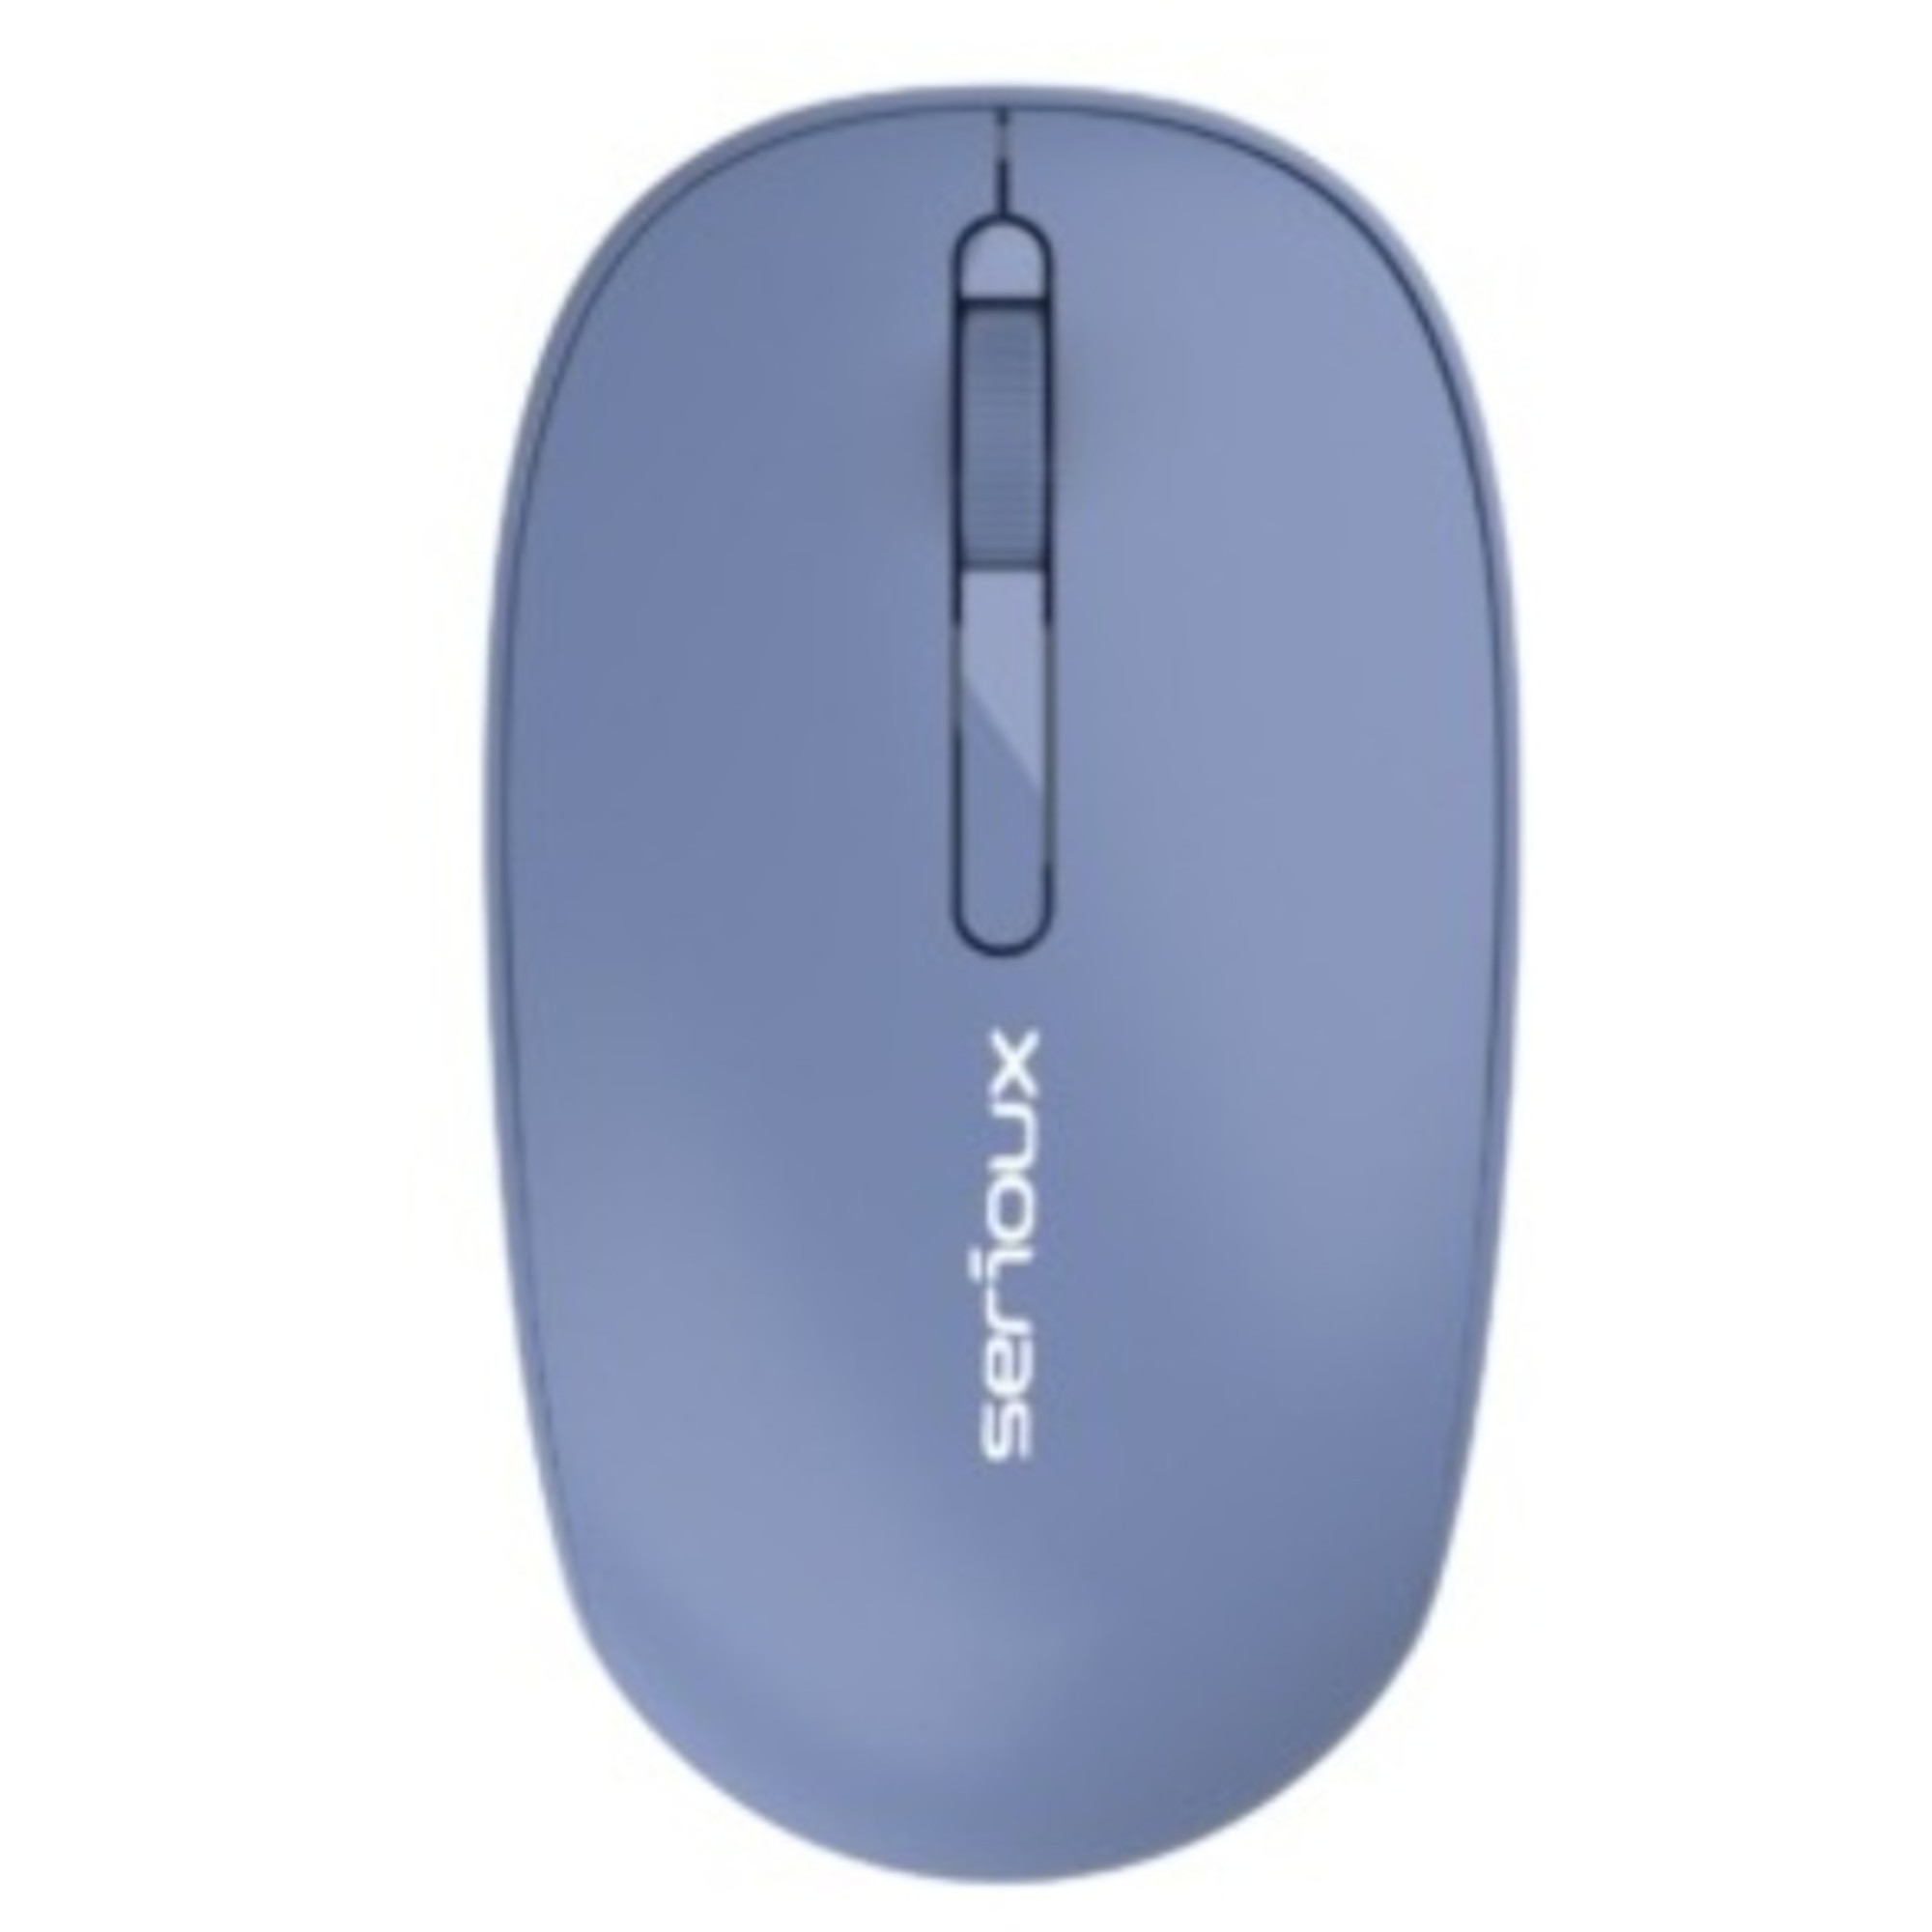 Mouse Serioux SPARK 215, Wireless, 1000 dpi, Albastru